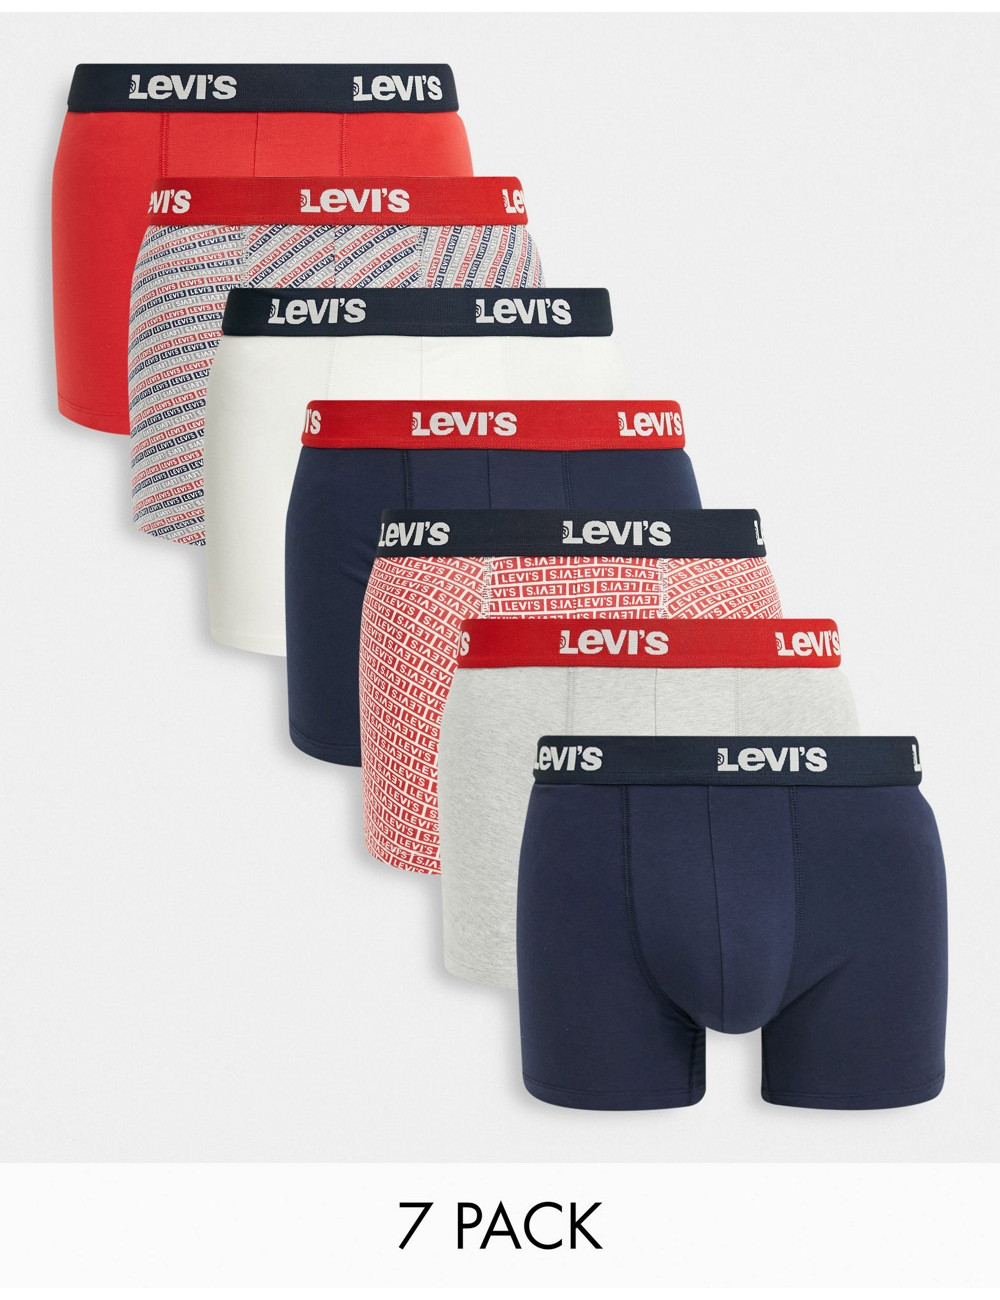 Levi's 7 pack gift set...